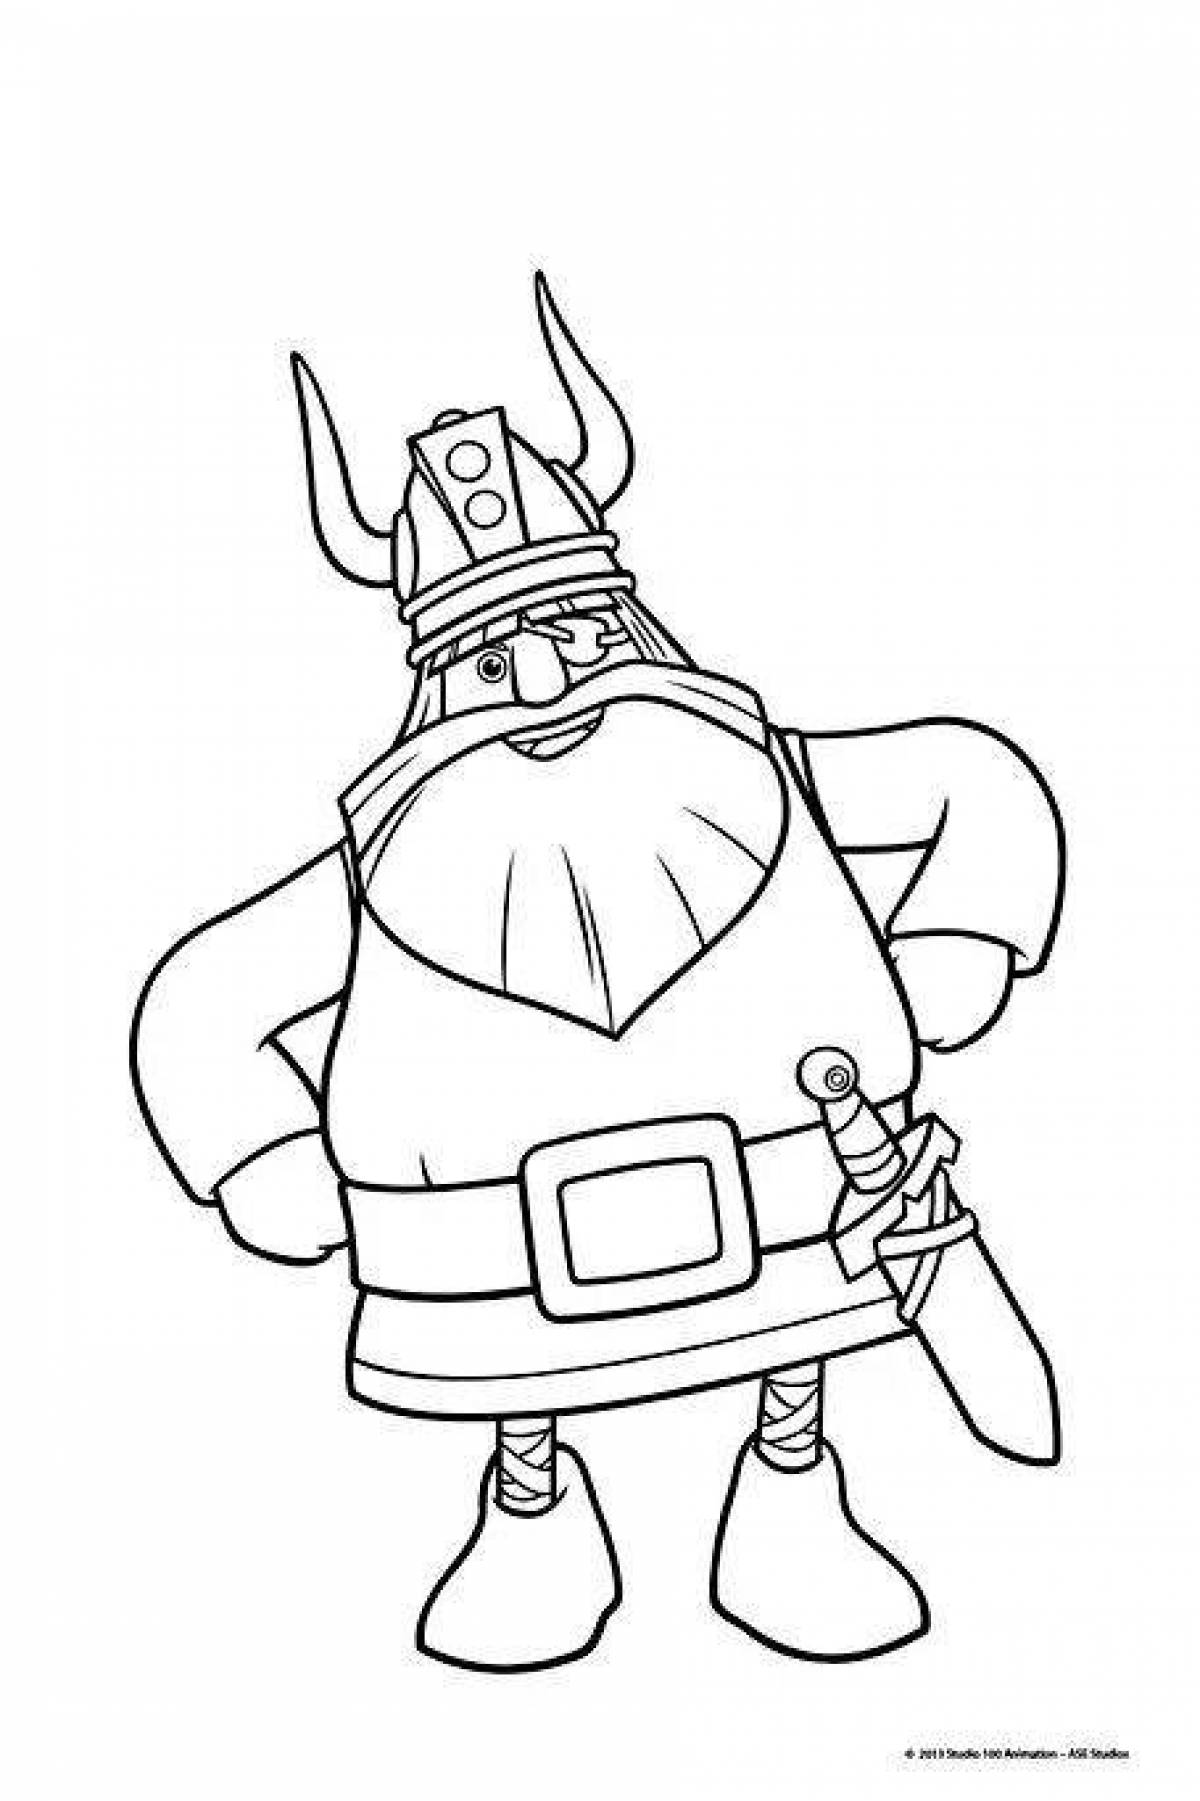 Viking coloring page